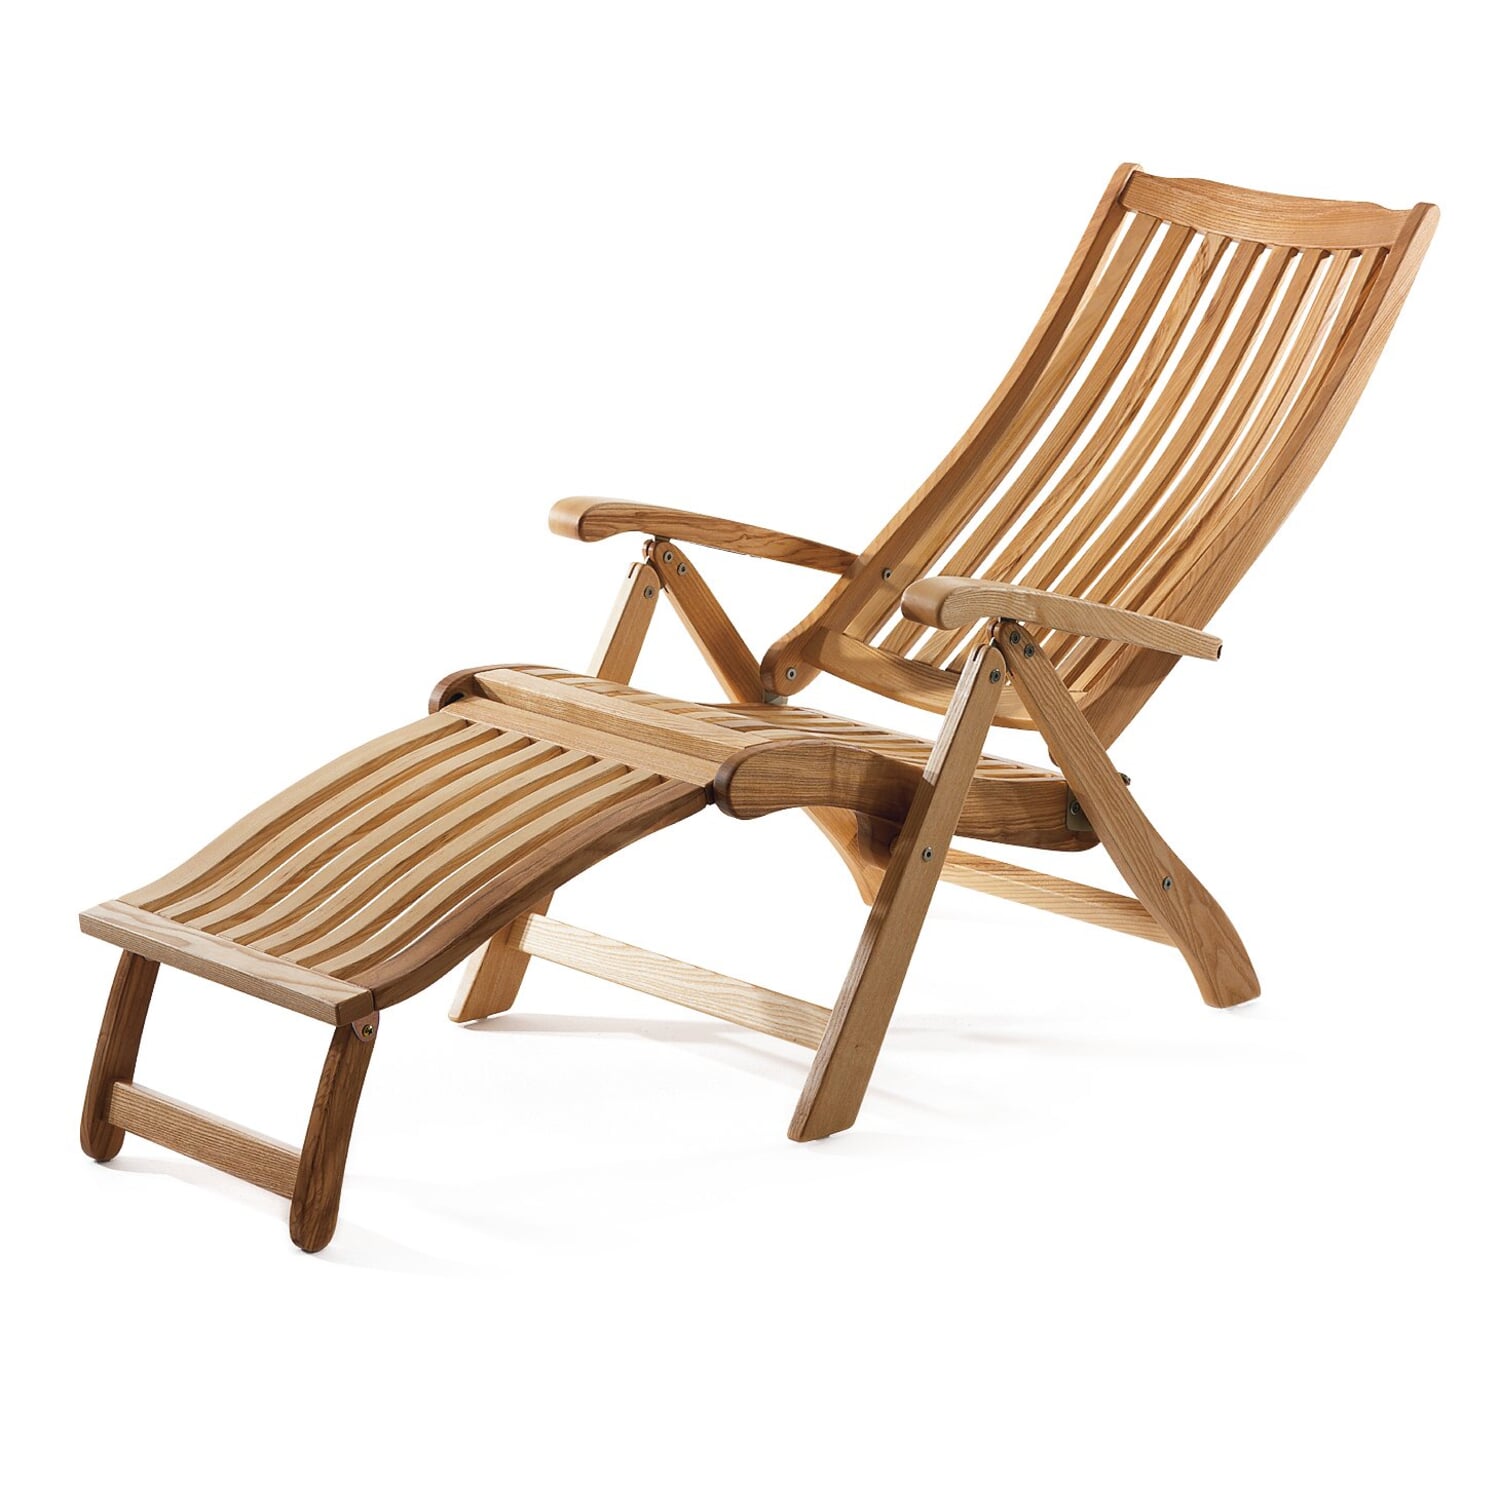 Ash Wood Deck Chair Manufactum, Wooden Deck Chairs Ireland